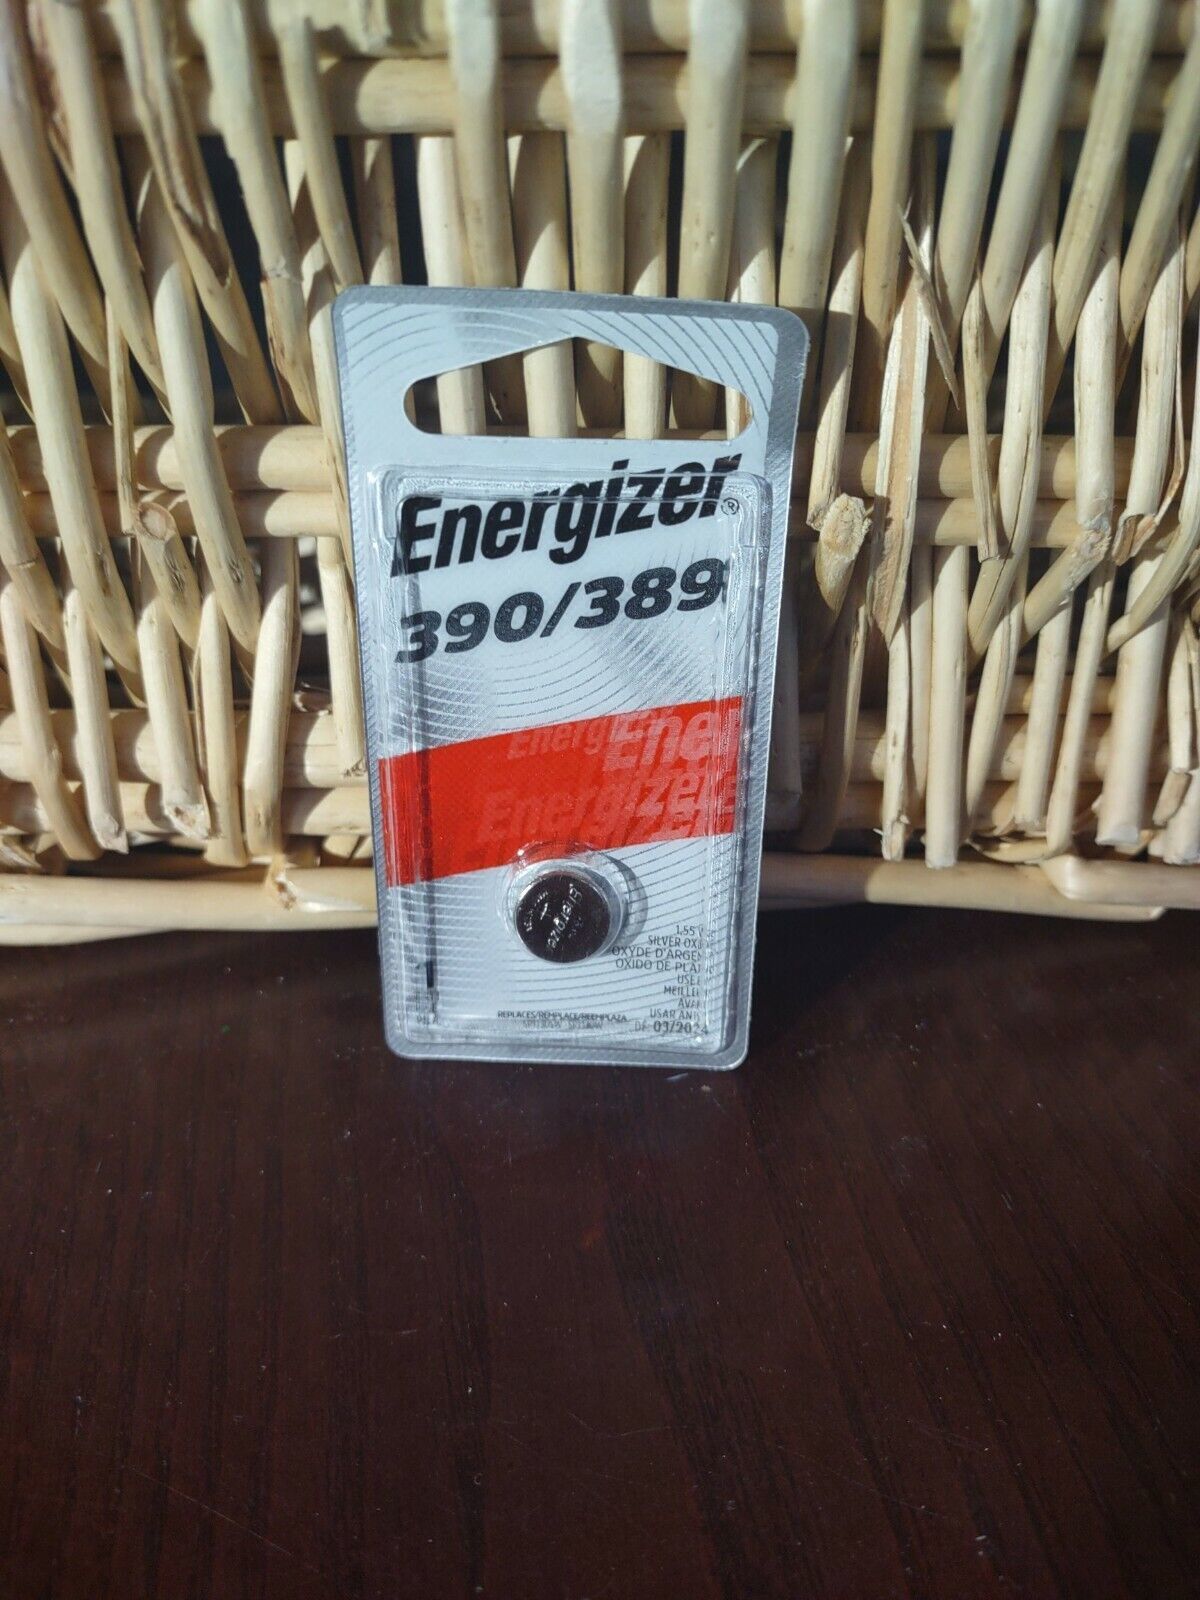 Energizer 390/389 Battery - $18.69